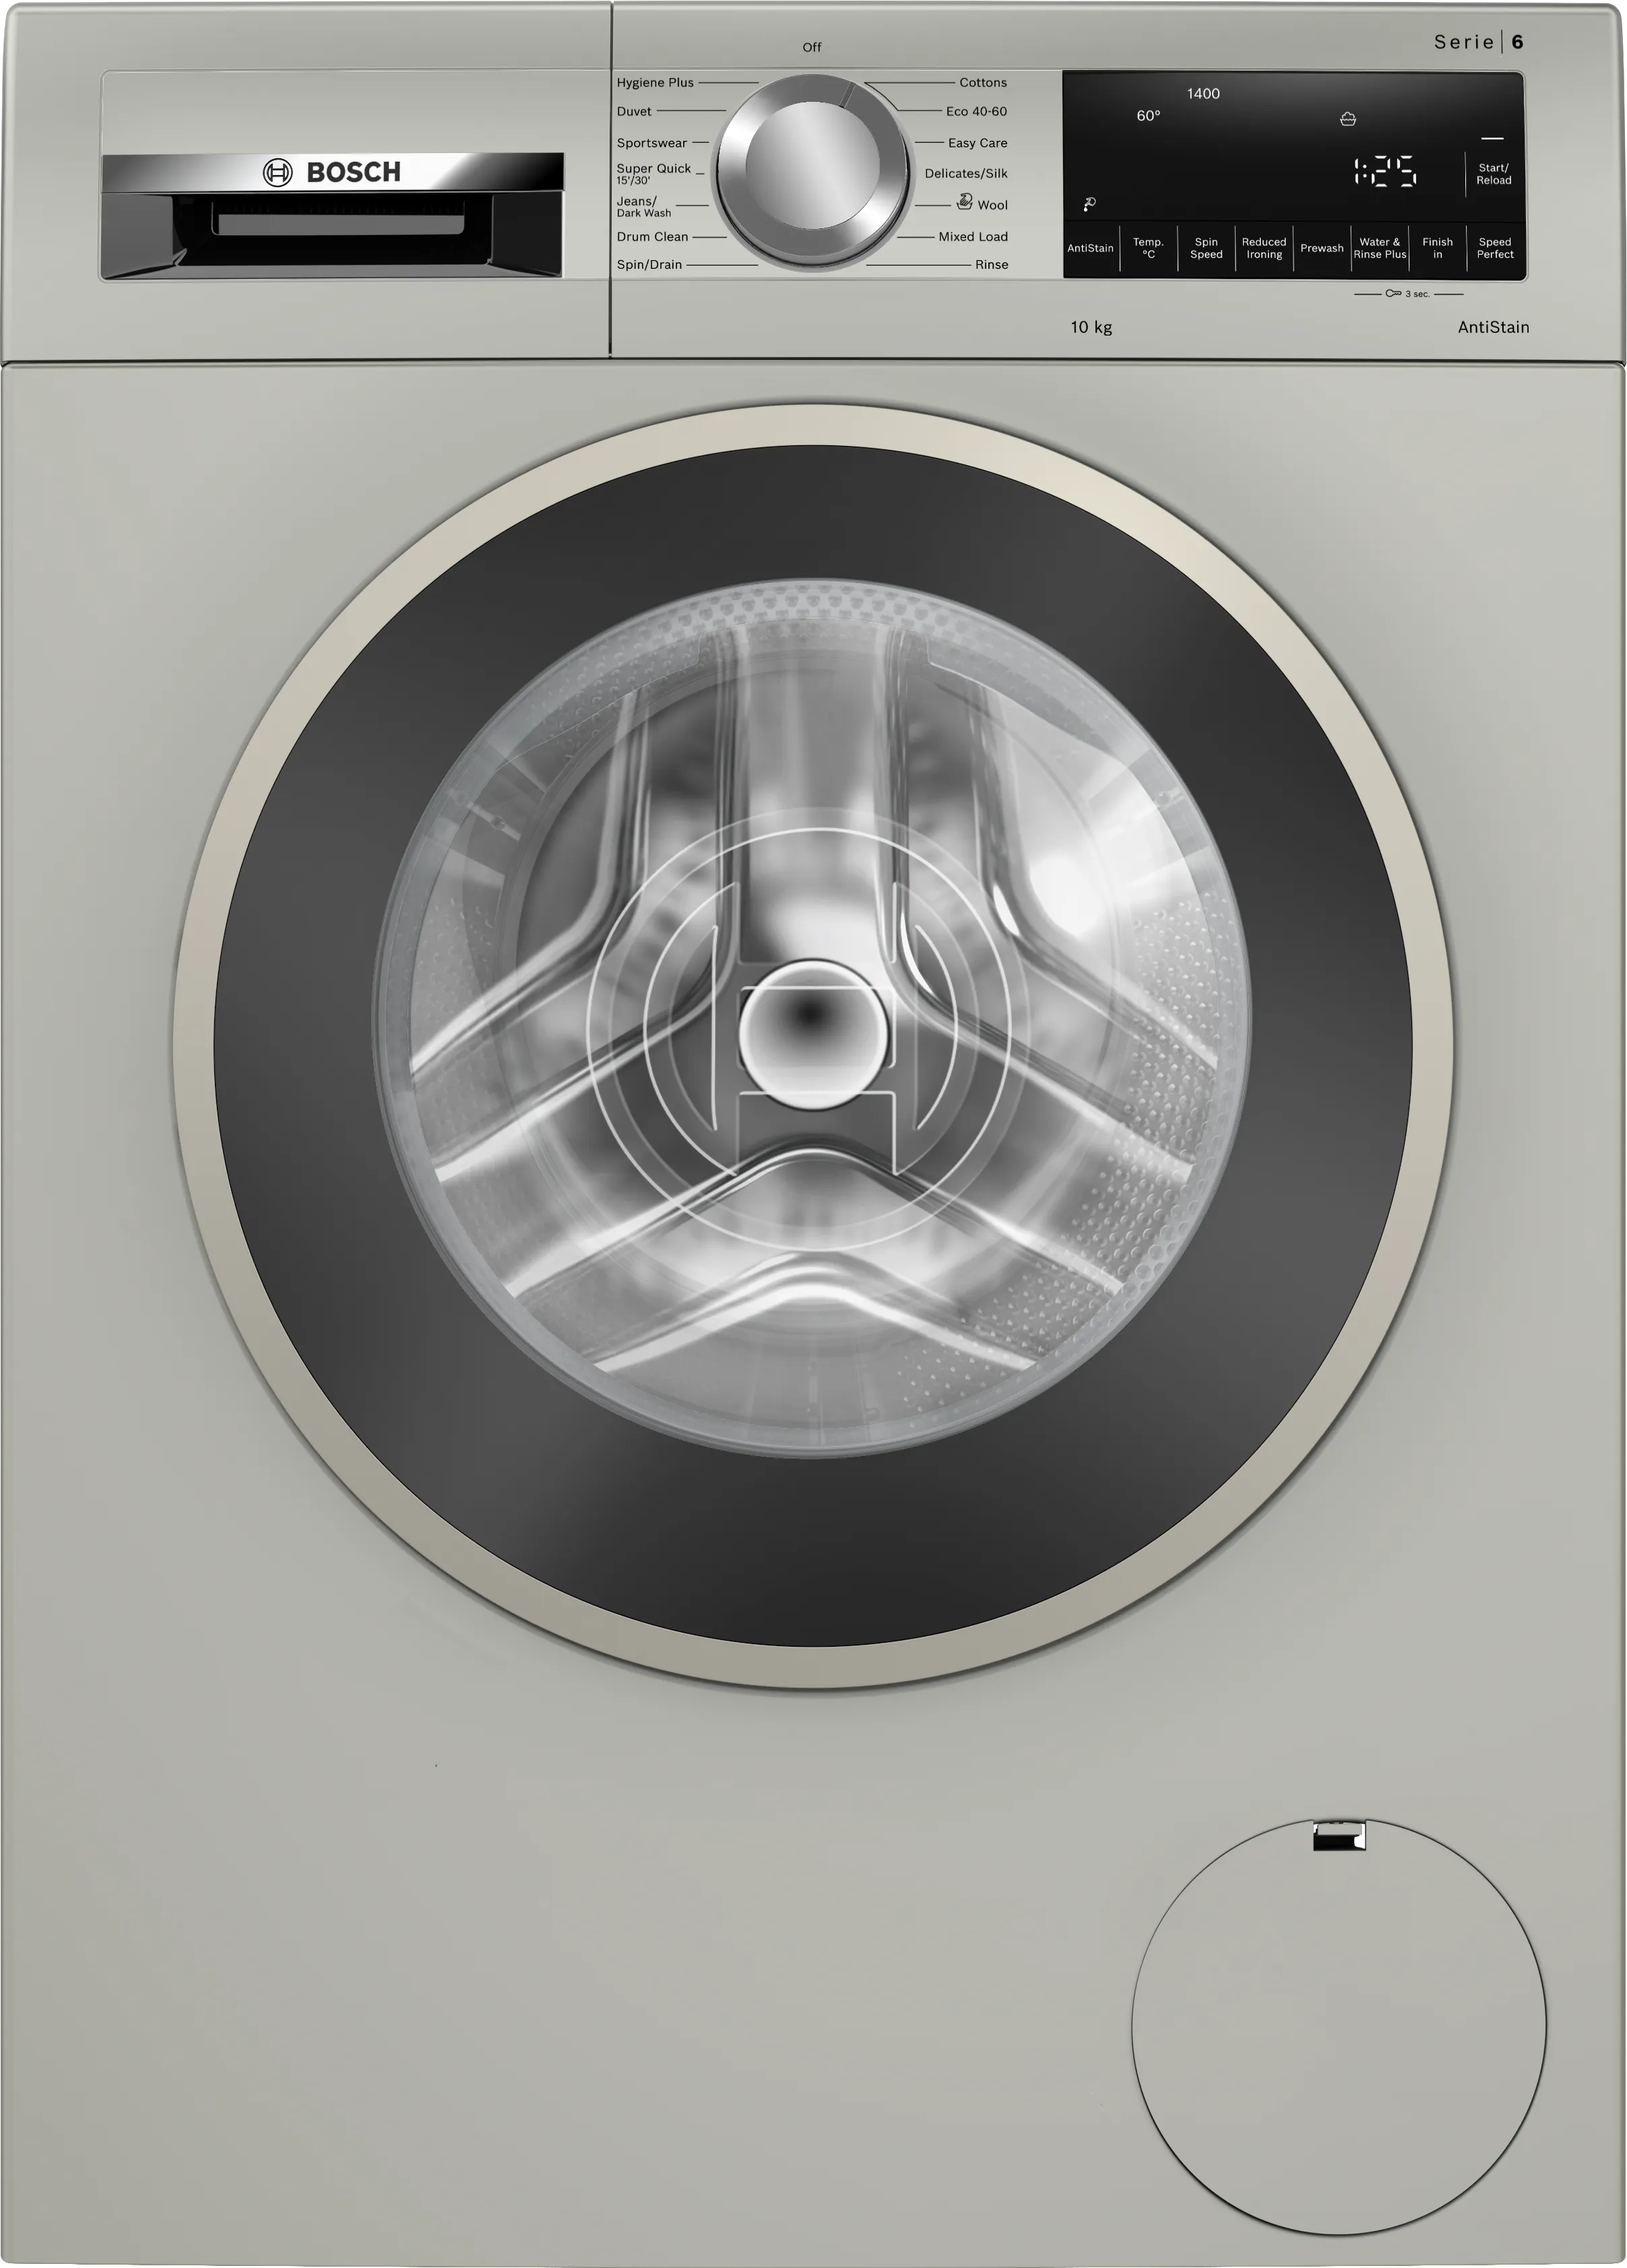 Series 6 washing machine, frontloader fullsize 10 kg 1400 rpm, Silver inox 